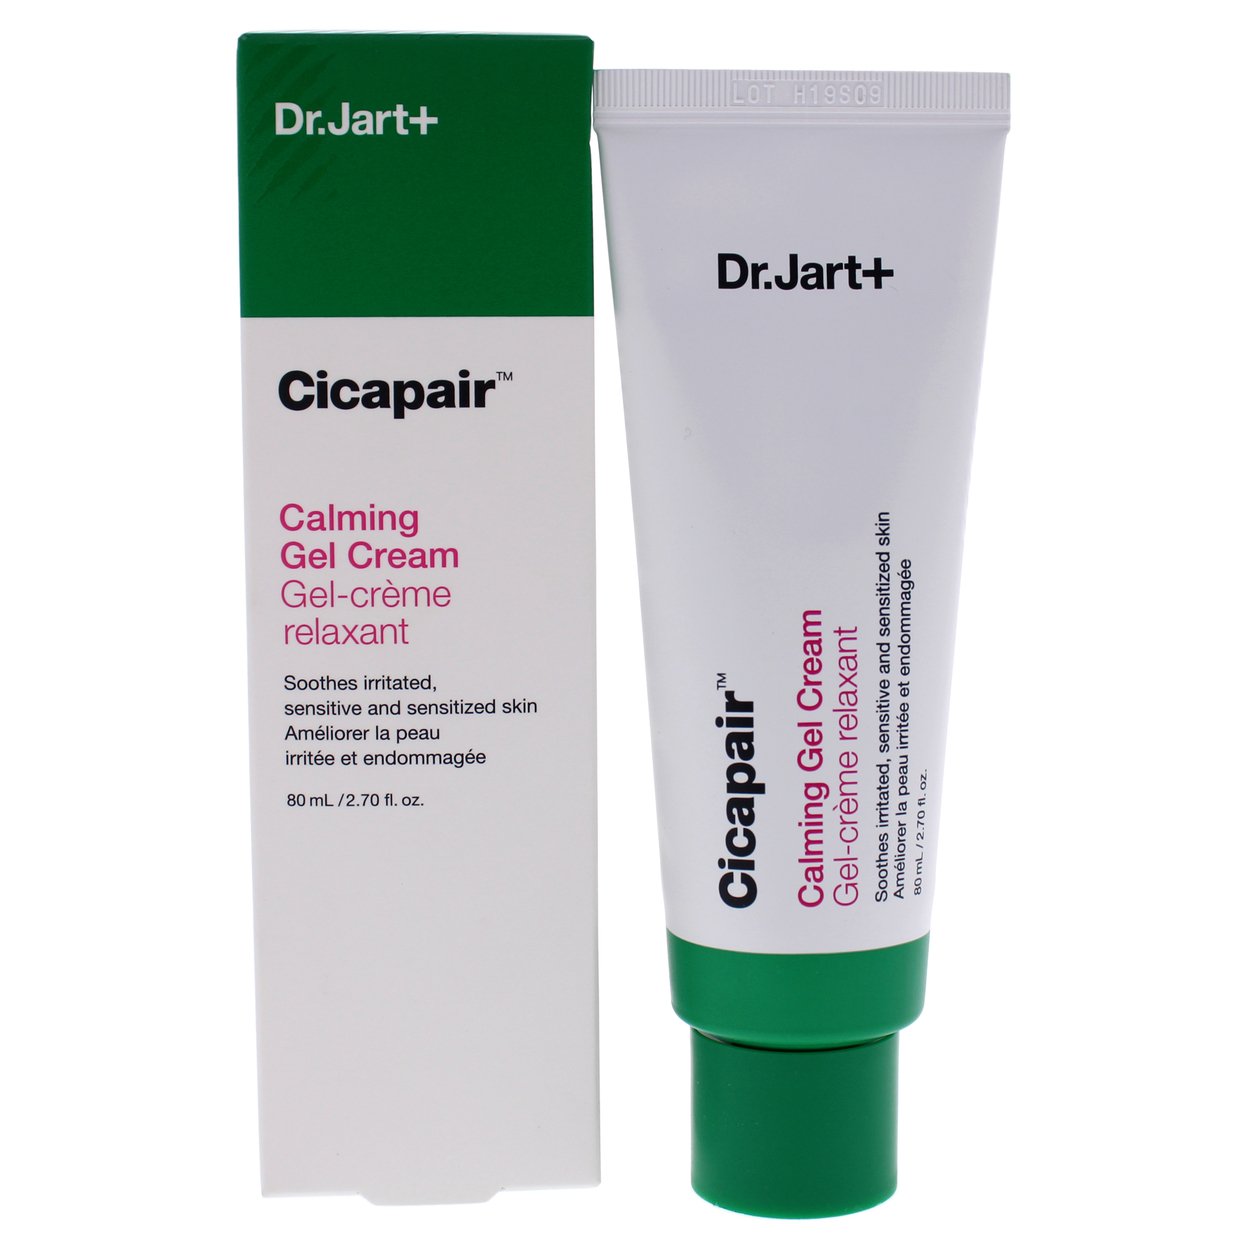 Dr. Jart+ Cicapair Calming Gel Cream 2.7 Oz